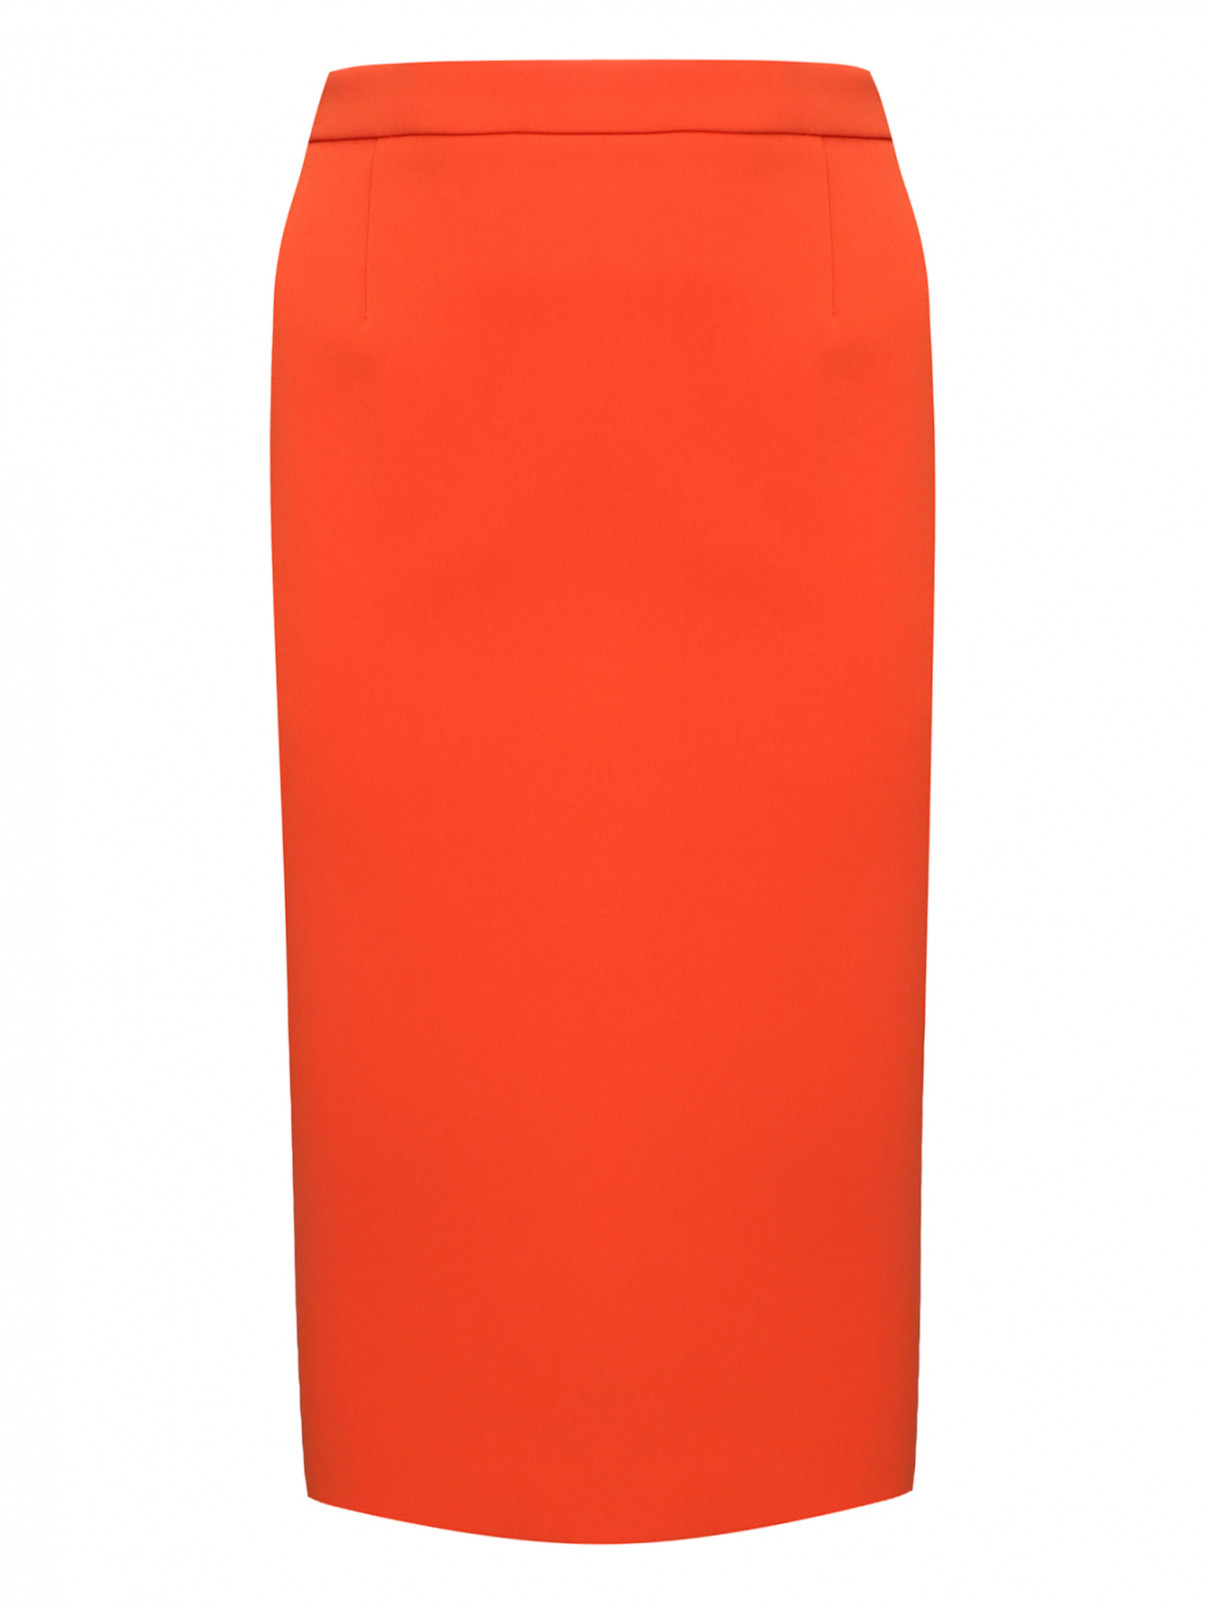 Юбка-карандаш Moschino Boutique  –  Общий вид  – Цвет:  Оранжевый